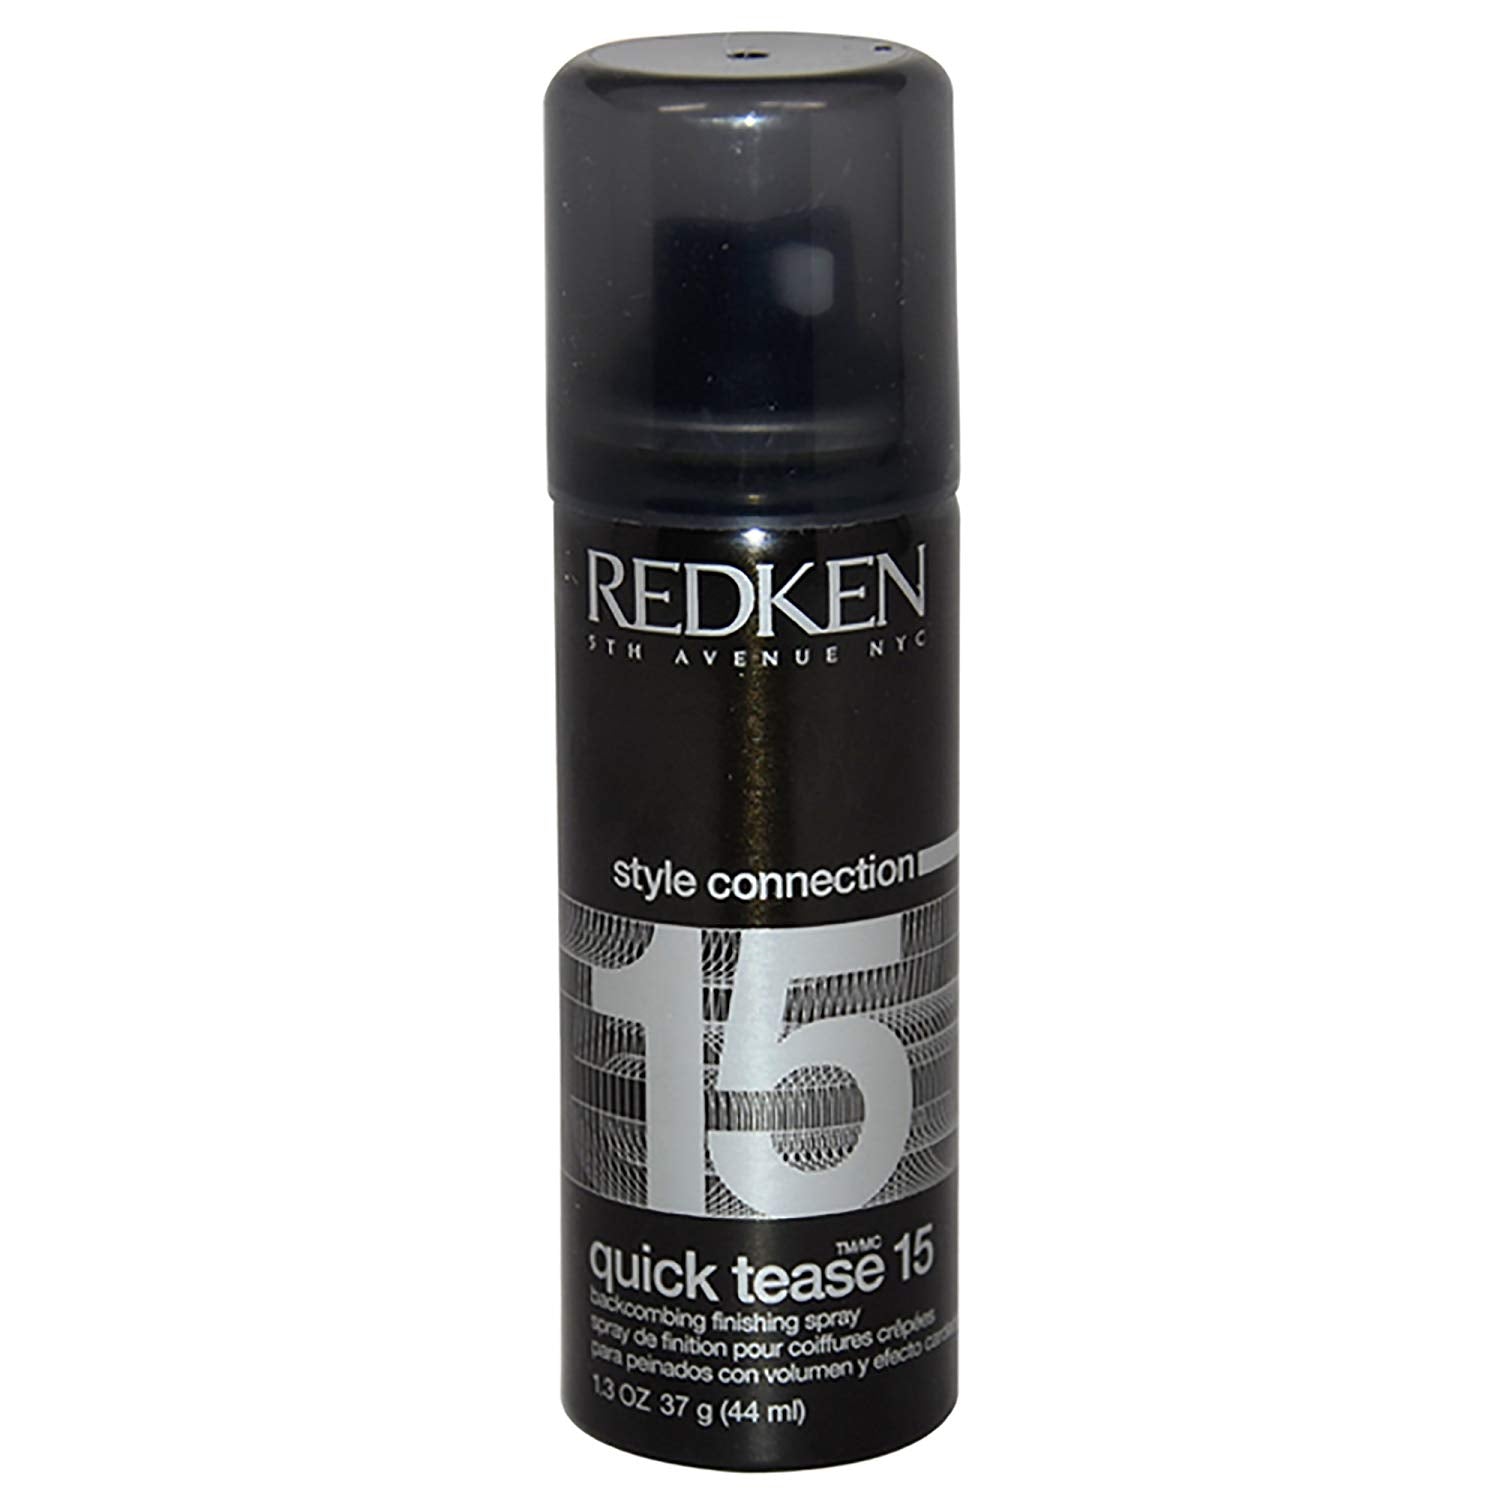 Redken Root Tease Finishing SprayHair SprayREDKENSize: 1.3 oz